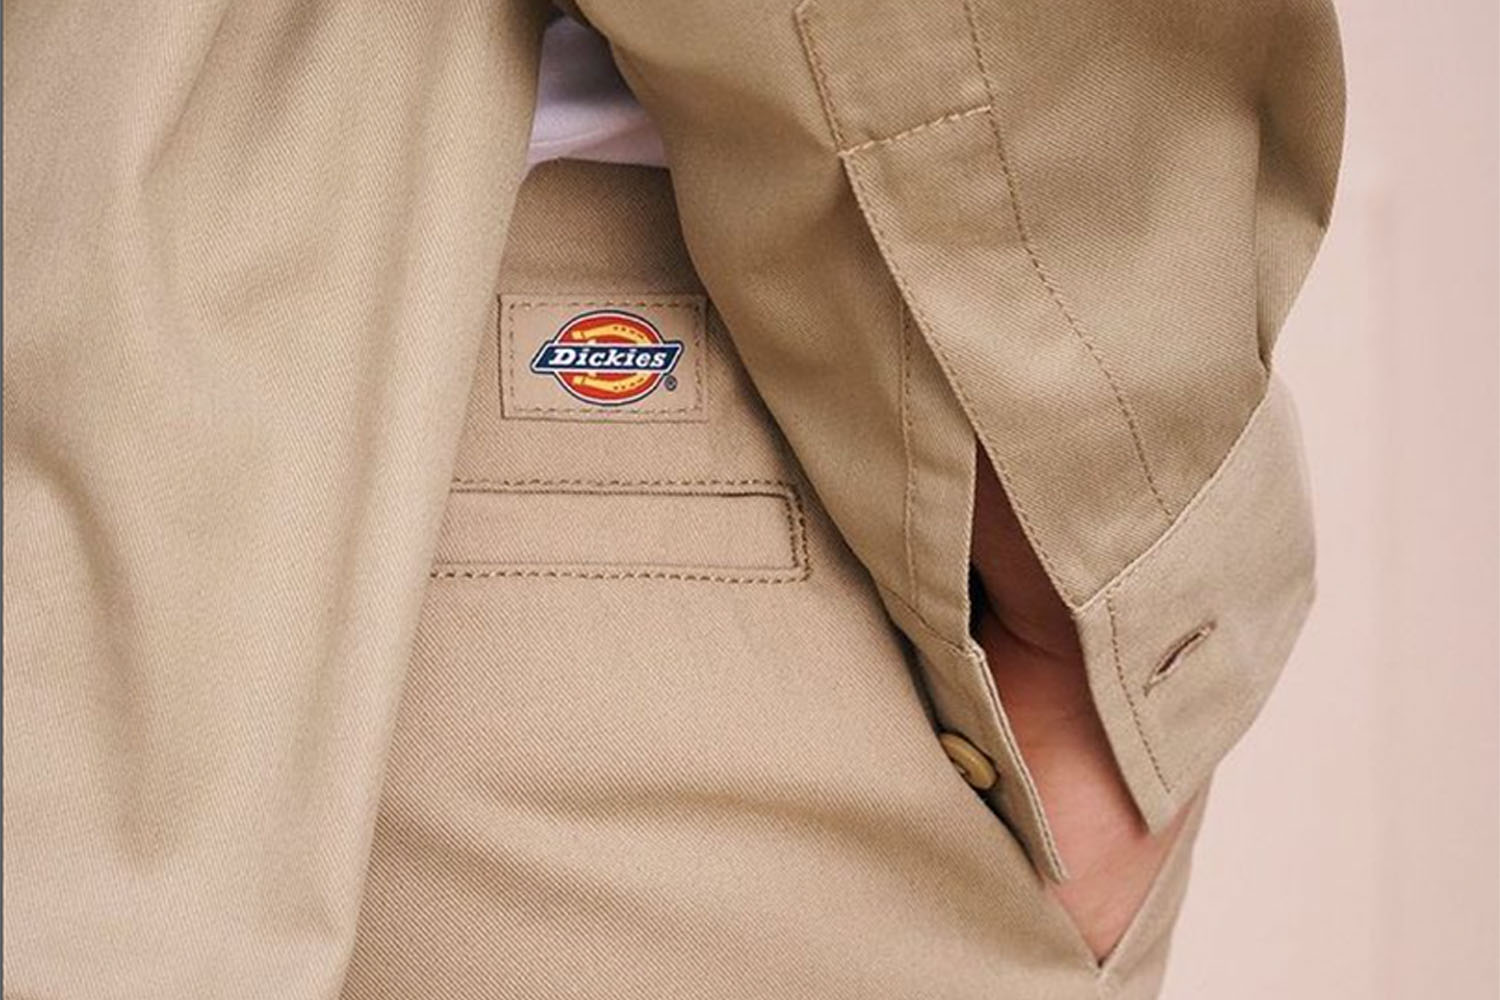 a close up shot of the Dickies logo on a pair of tan Dickies work pants